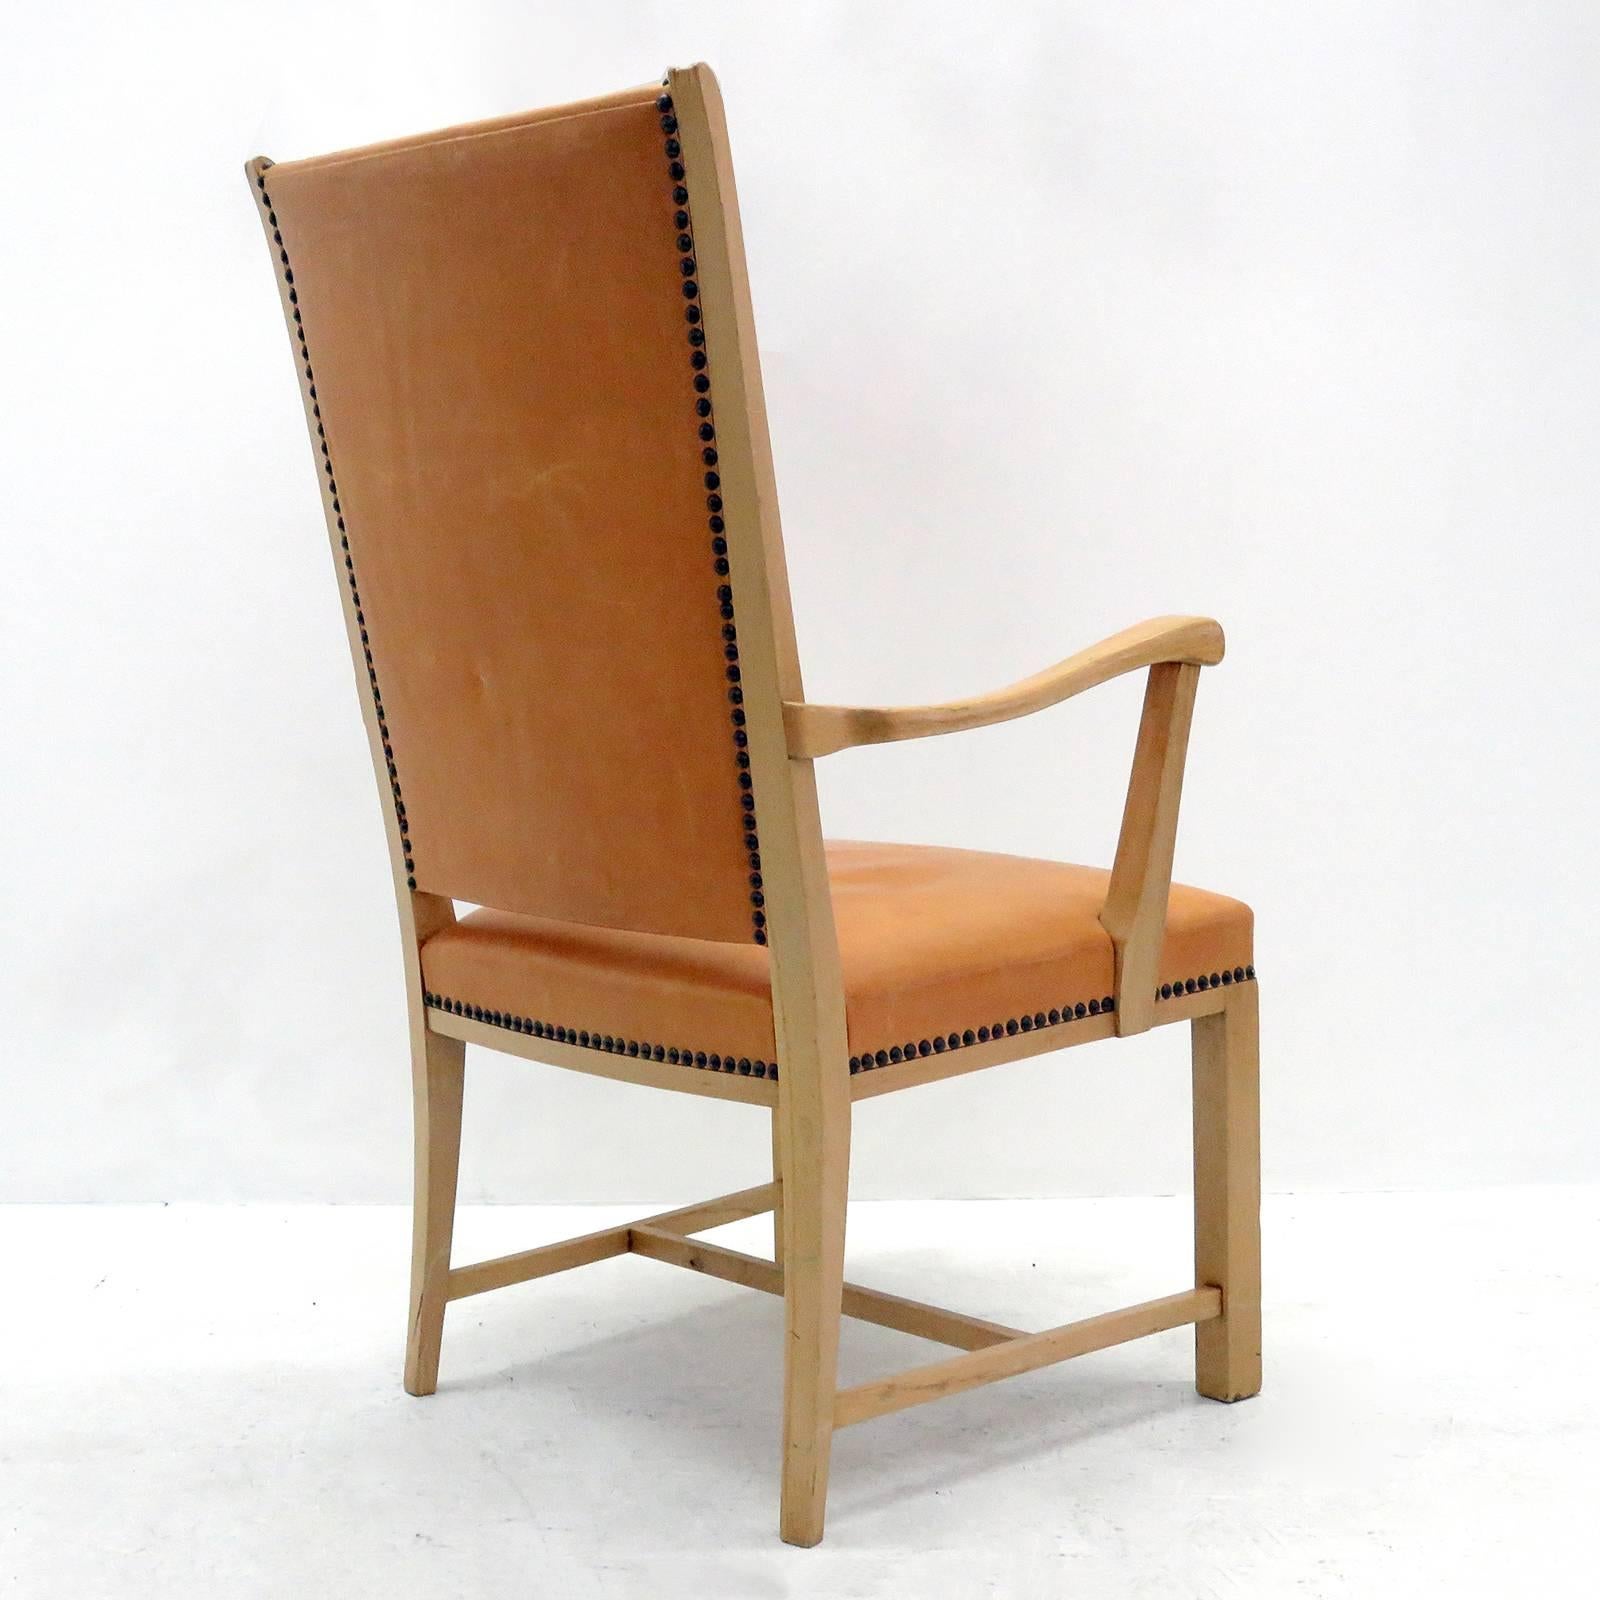 Mid-20th Century Swedish Highback Leather Chair